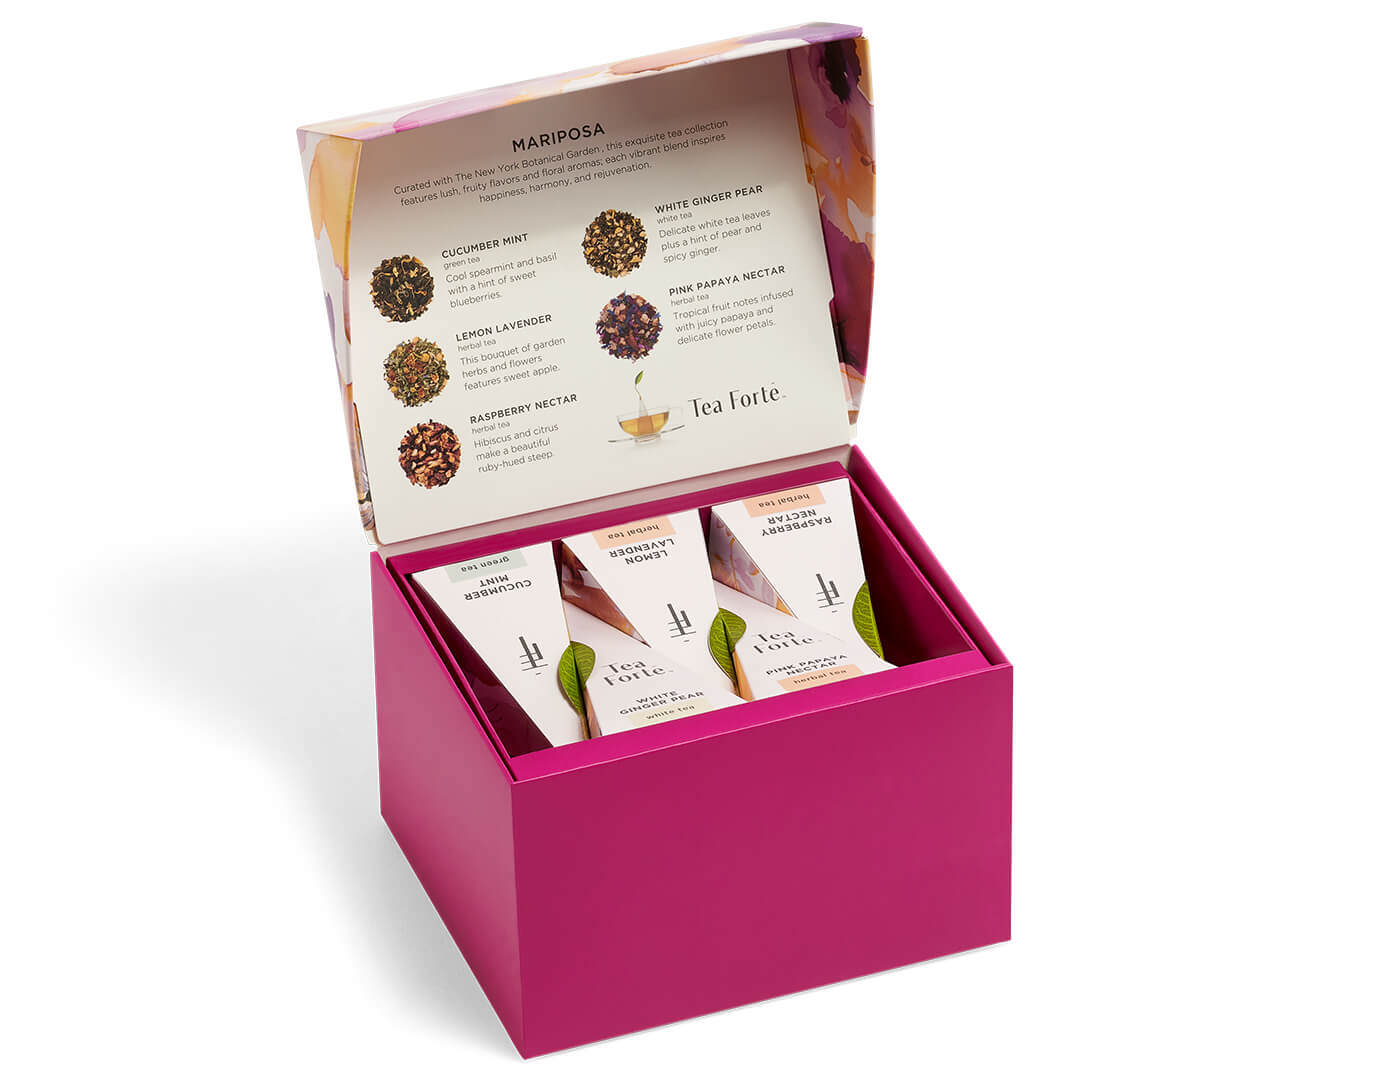 Mariposa Gift Set Mini Pette Box open of 10 pyramid tea infusers